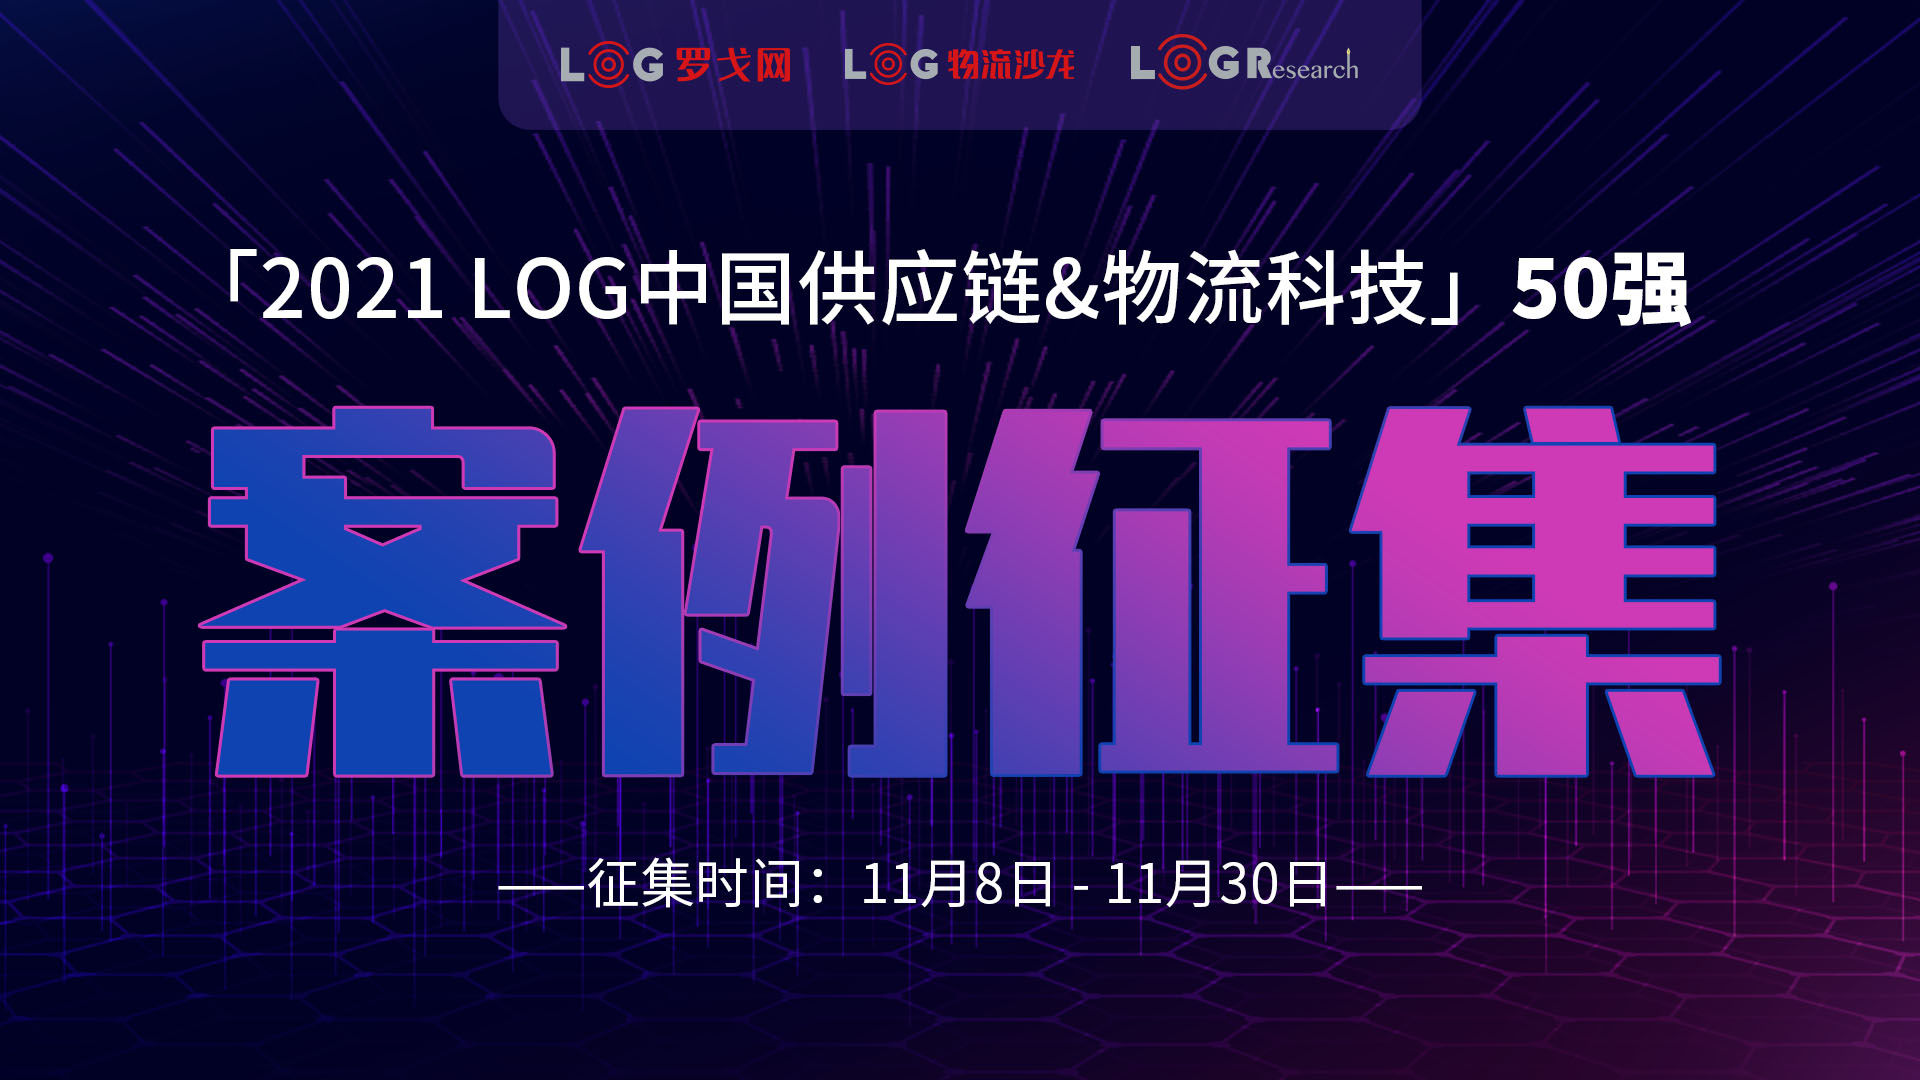 2021 LOG中國供應鏈&物流科技50強申報說明